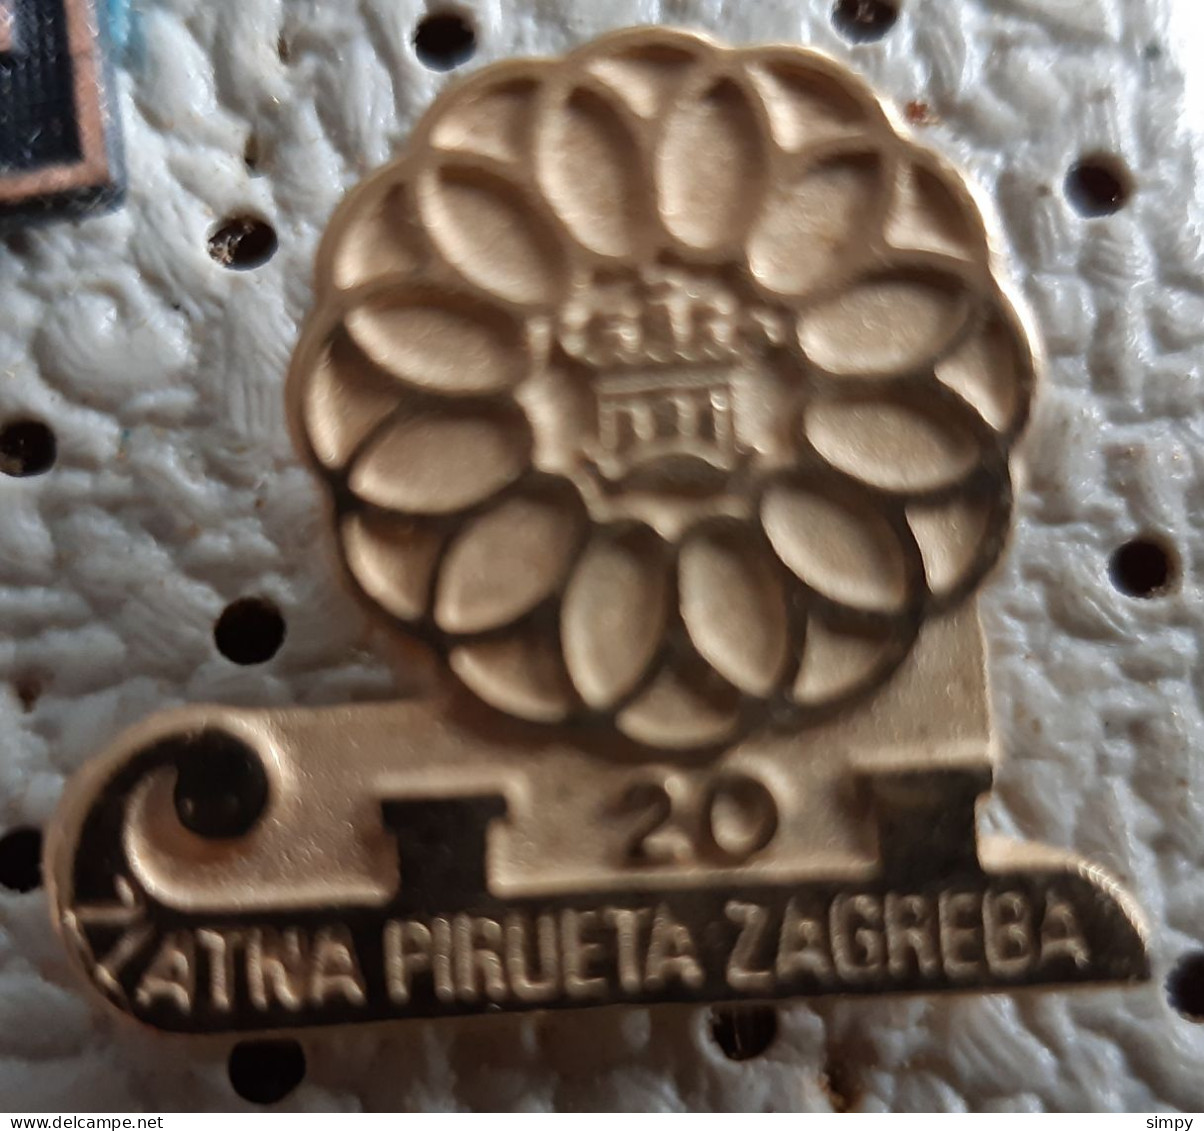 Zlatna Pirueta Zagreb 20 Years  Figure Skating Skate  YUgoslavia Vintage Pin Badge - Patinage Artistique